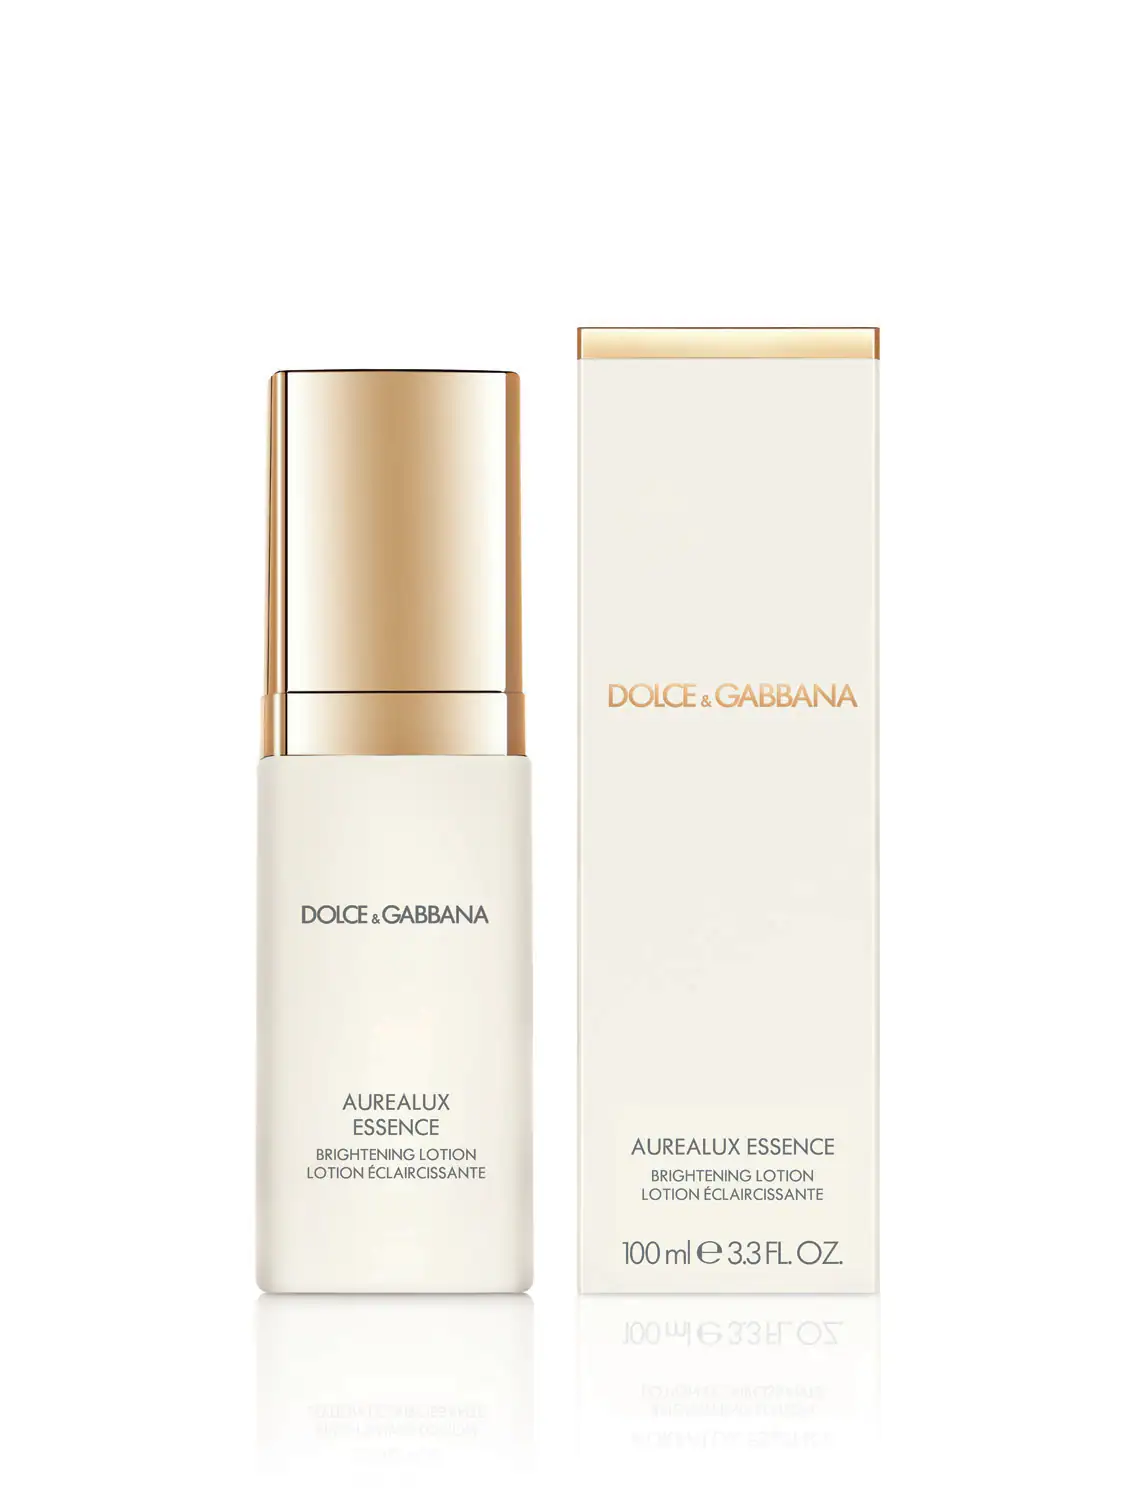 Esencia Aurealux de Dolce&Gabbana Skin Care